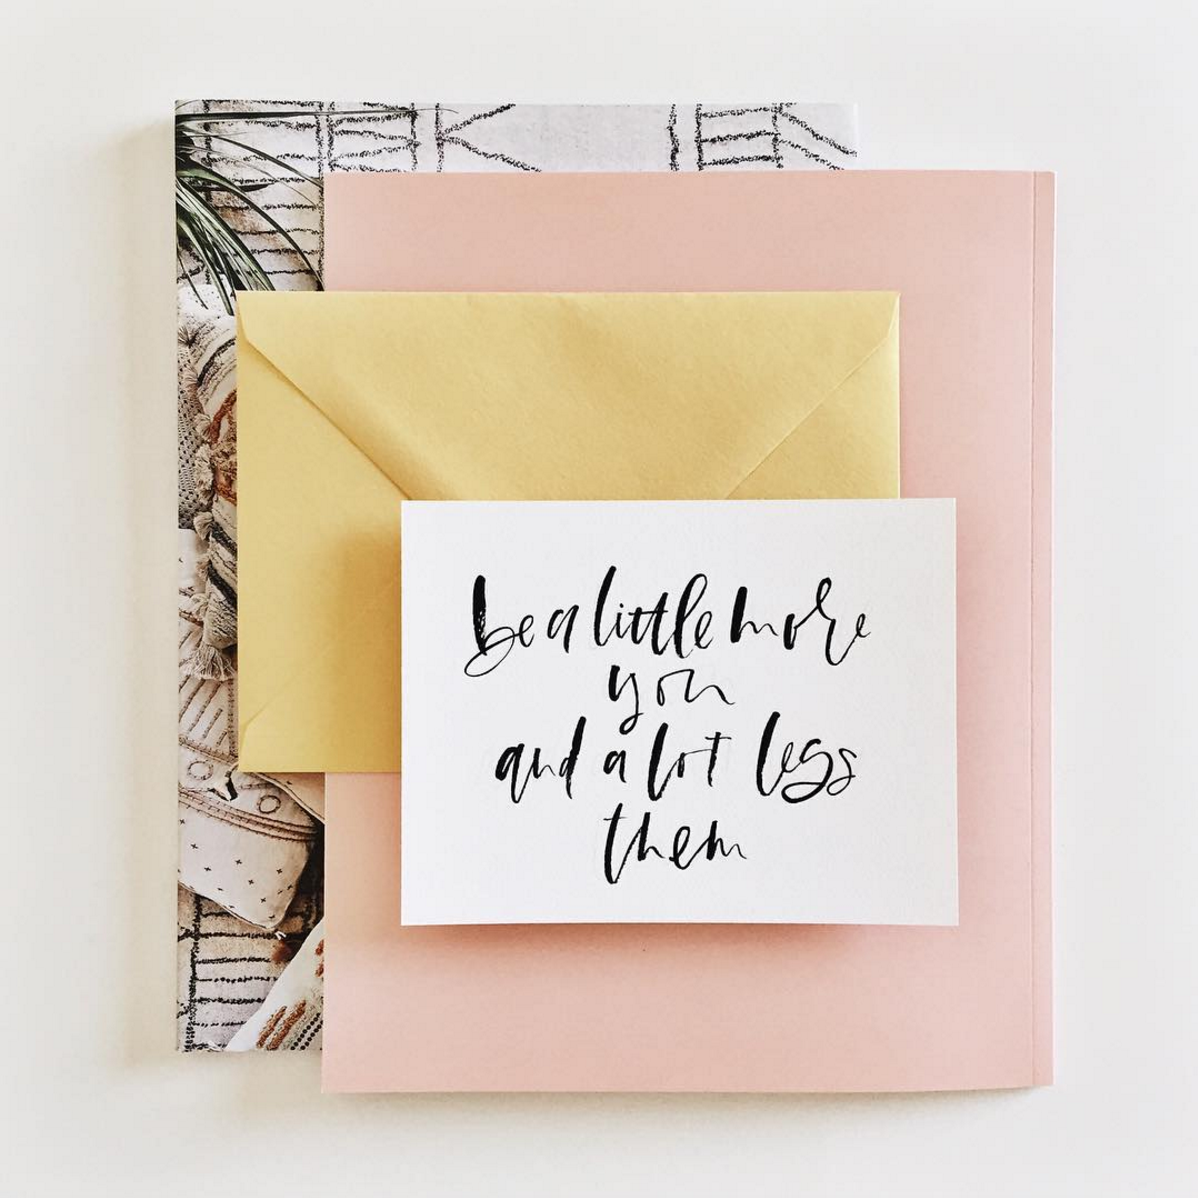 Wilde House Paper via Instagram / Oh So Beautiful Paper